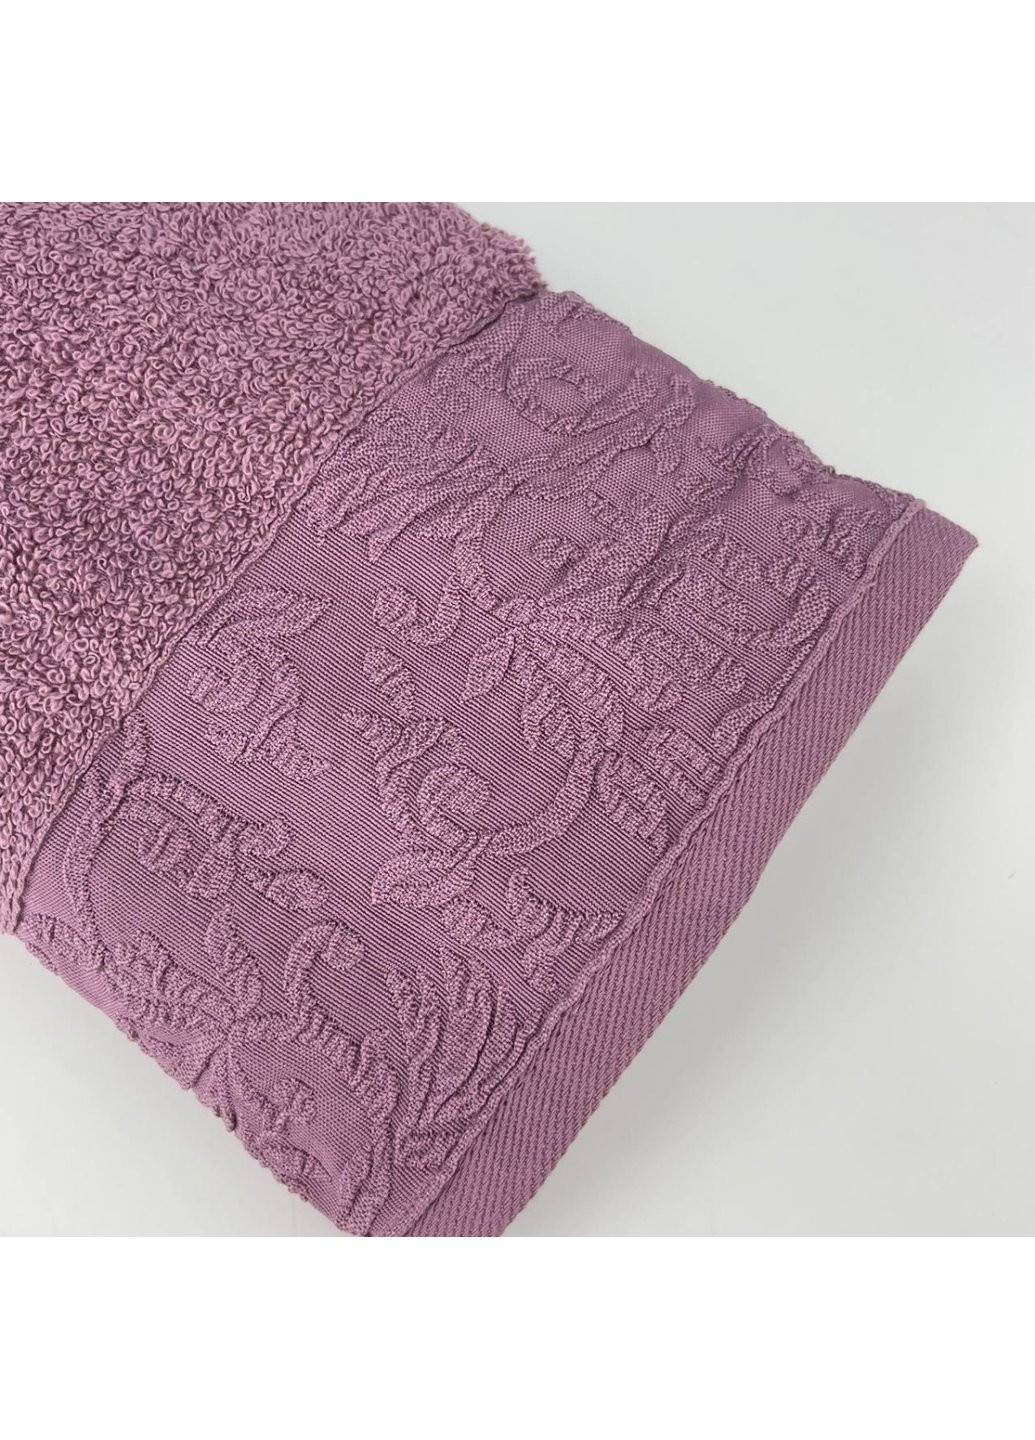 Power полотенце для лица махровое febo vip cotton botan турция 6400 фиолетовое 50х90 см комбинированный производство - Турция